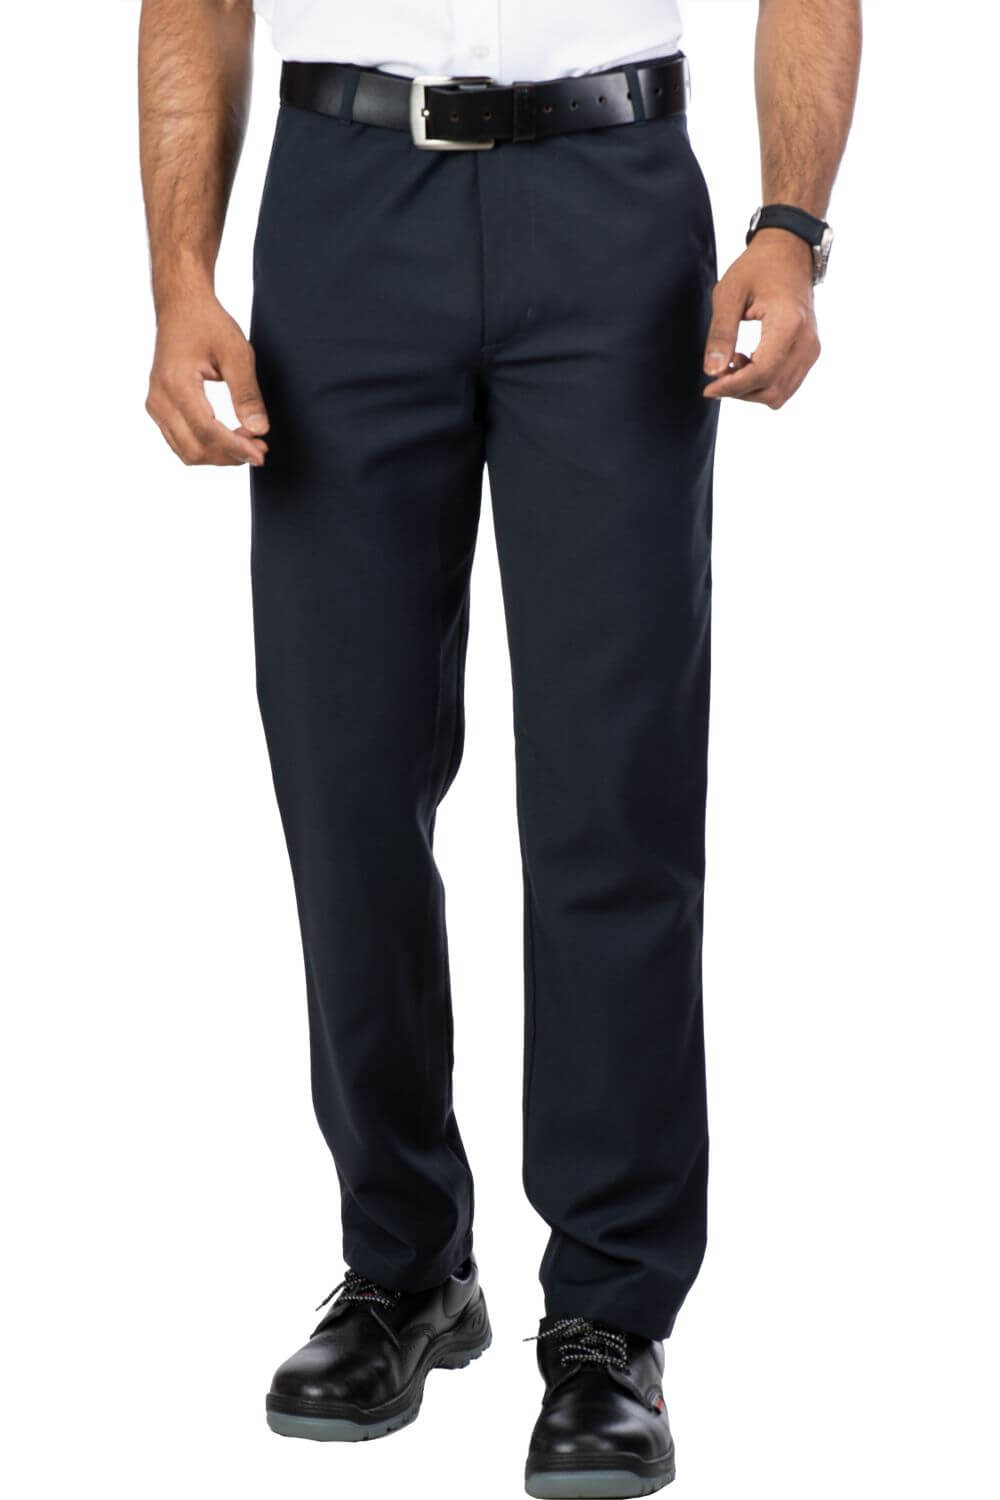 Regular comfort fit With Ergonomic design Grey Formal Trouser